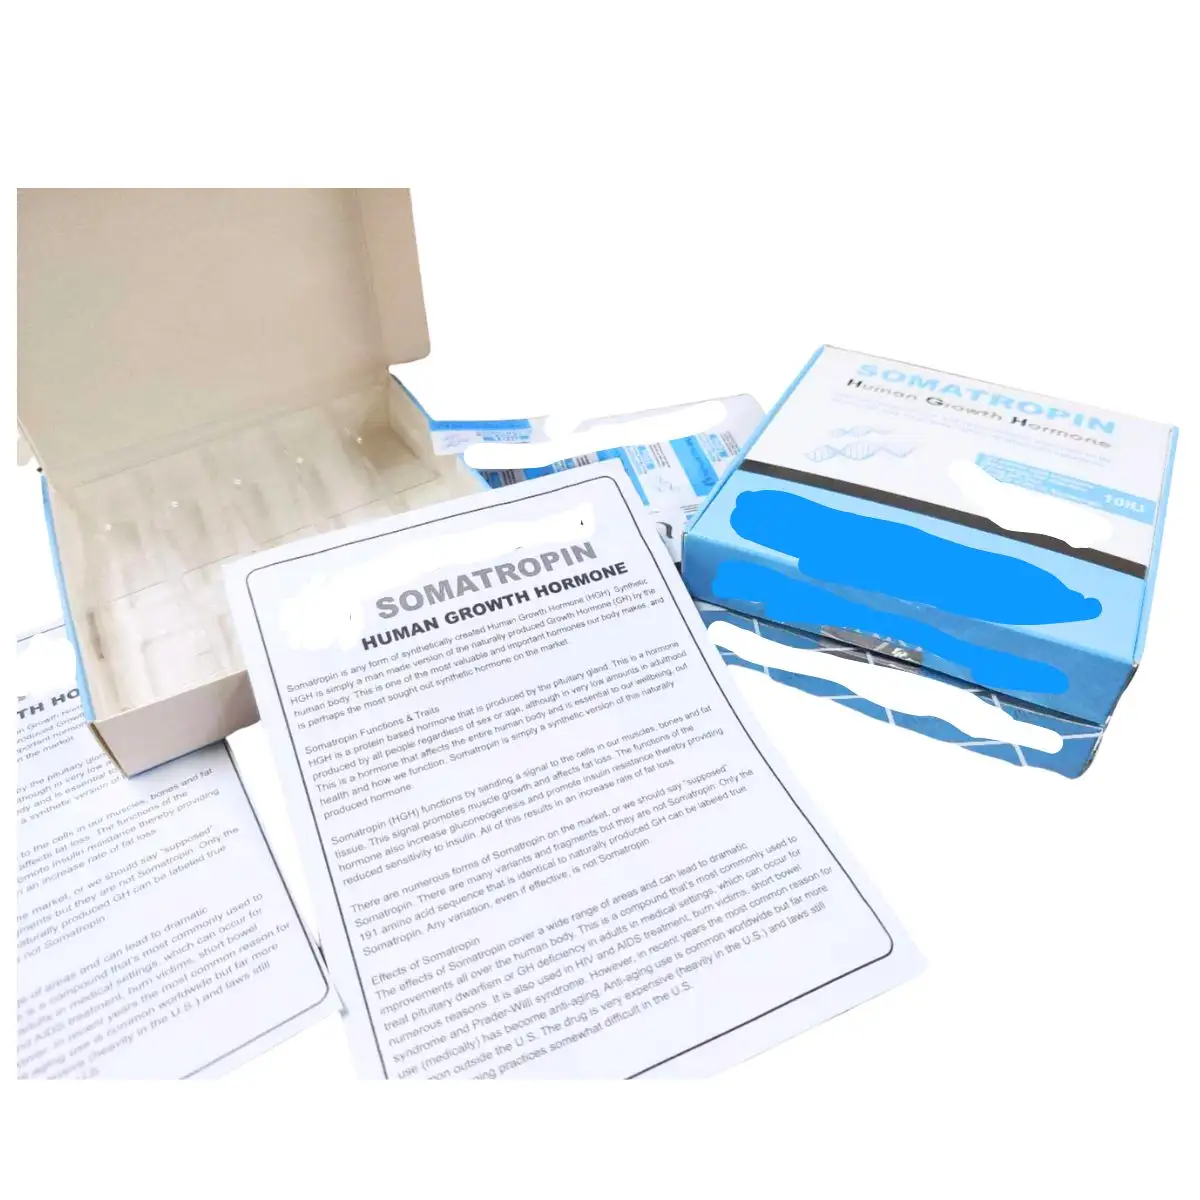 RTS büyüme hormonu kas bina ambalaj kutusu Somatropina plastik tepsi kağıt etiket ile 2ml flakon hgh ambalaj kutuları